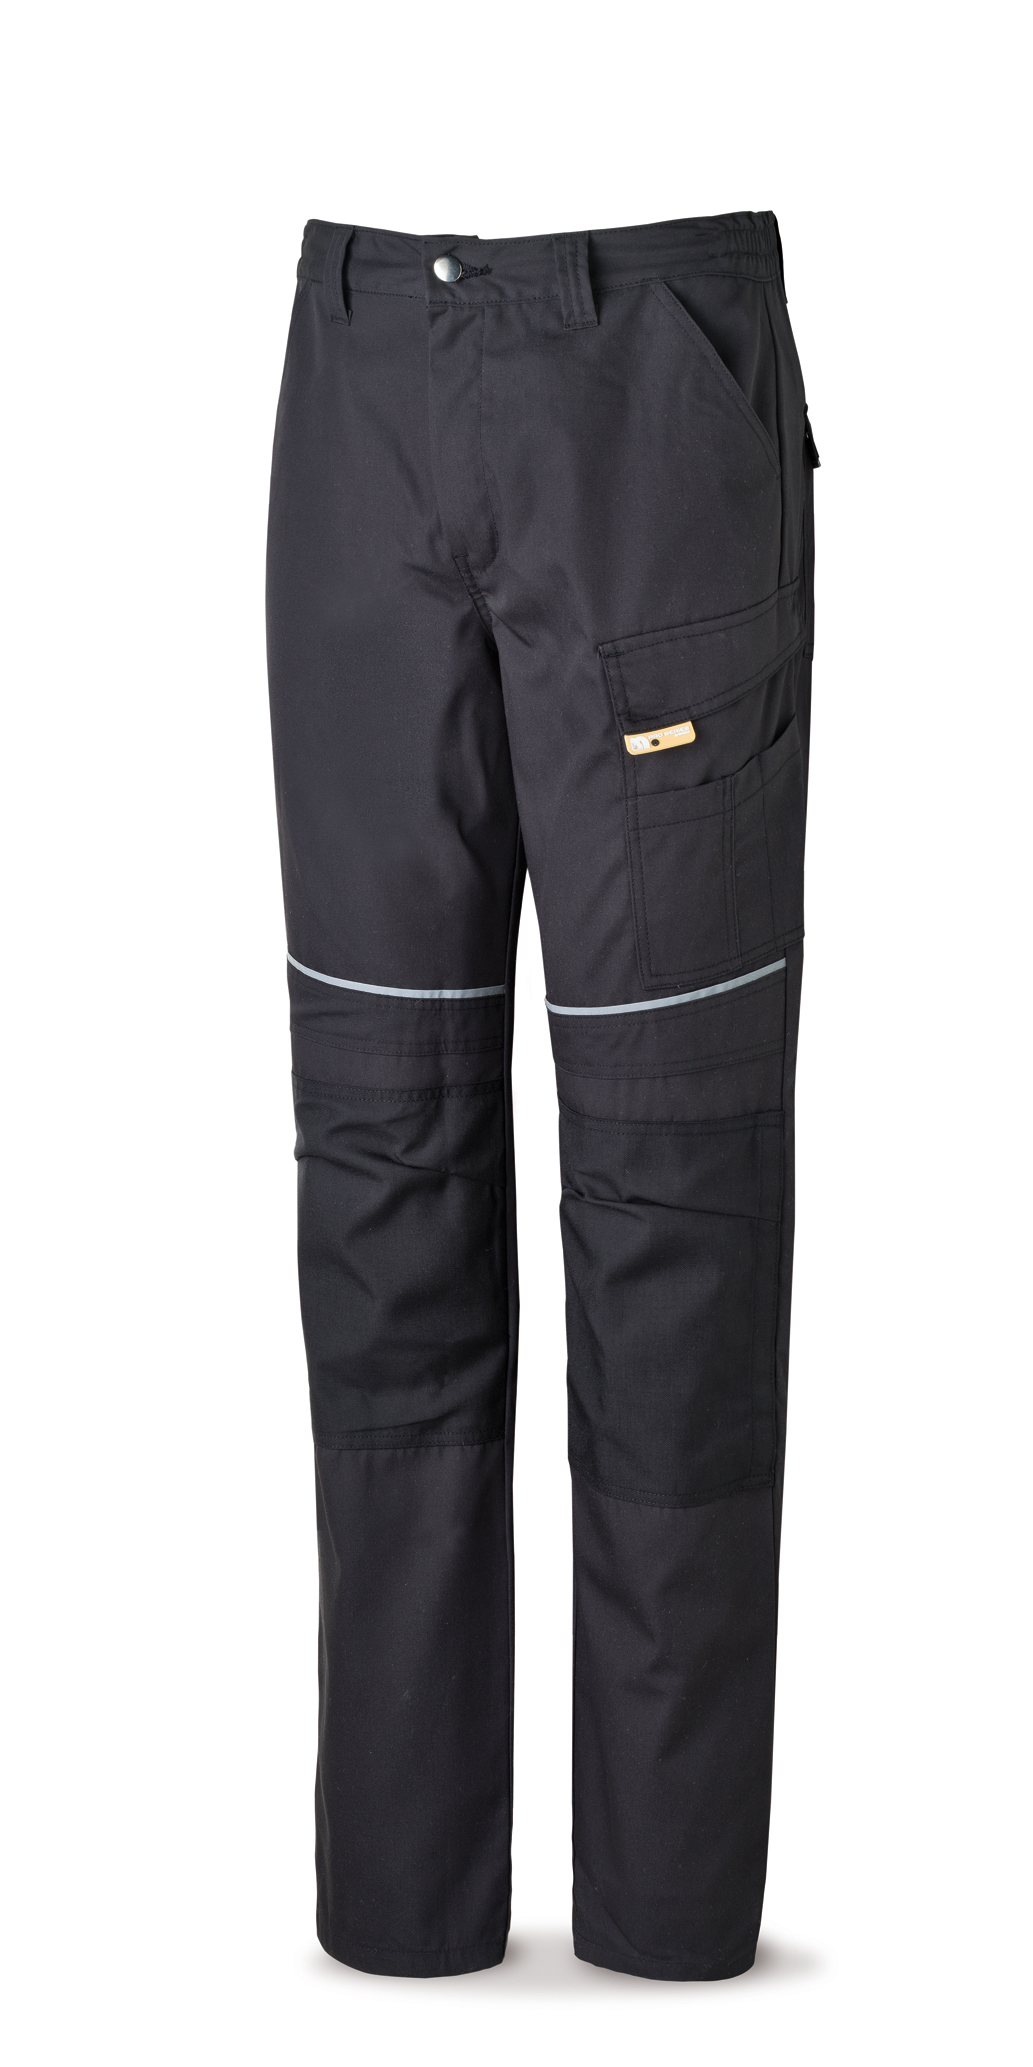 588-PN Vestuario Laboral Pro Series Pantalón CANVAS negro poliéster/algodón 245 g. Multibolsillos